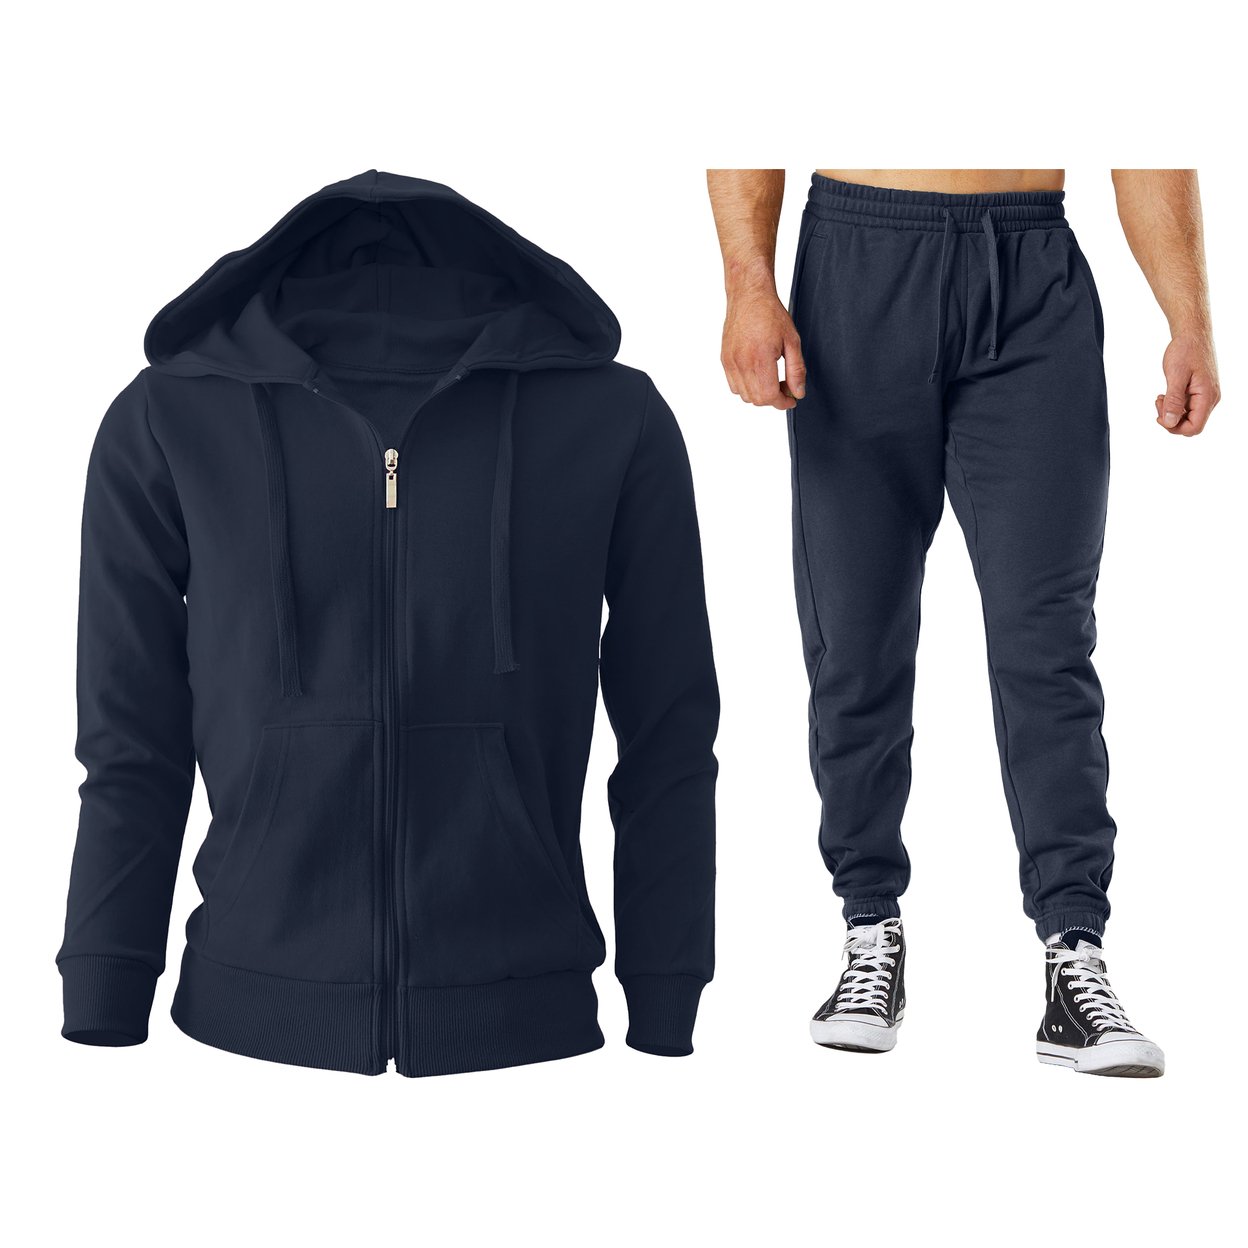 2/4-Piece: Men's Winter Warm Cozy Athletic Multi-Pockets BIG & TALL Sweatsuit Set - Black, 2, Large